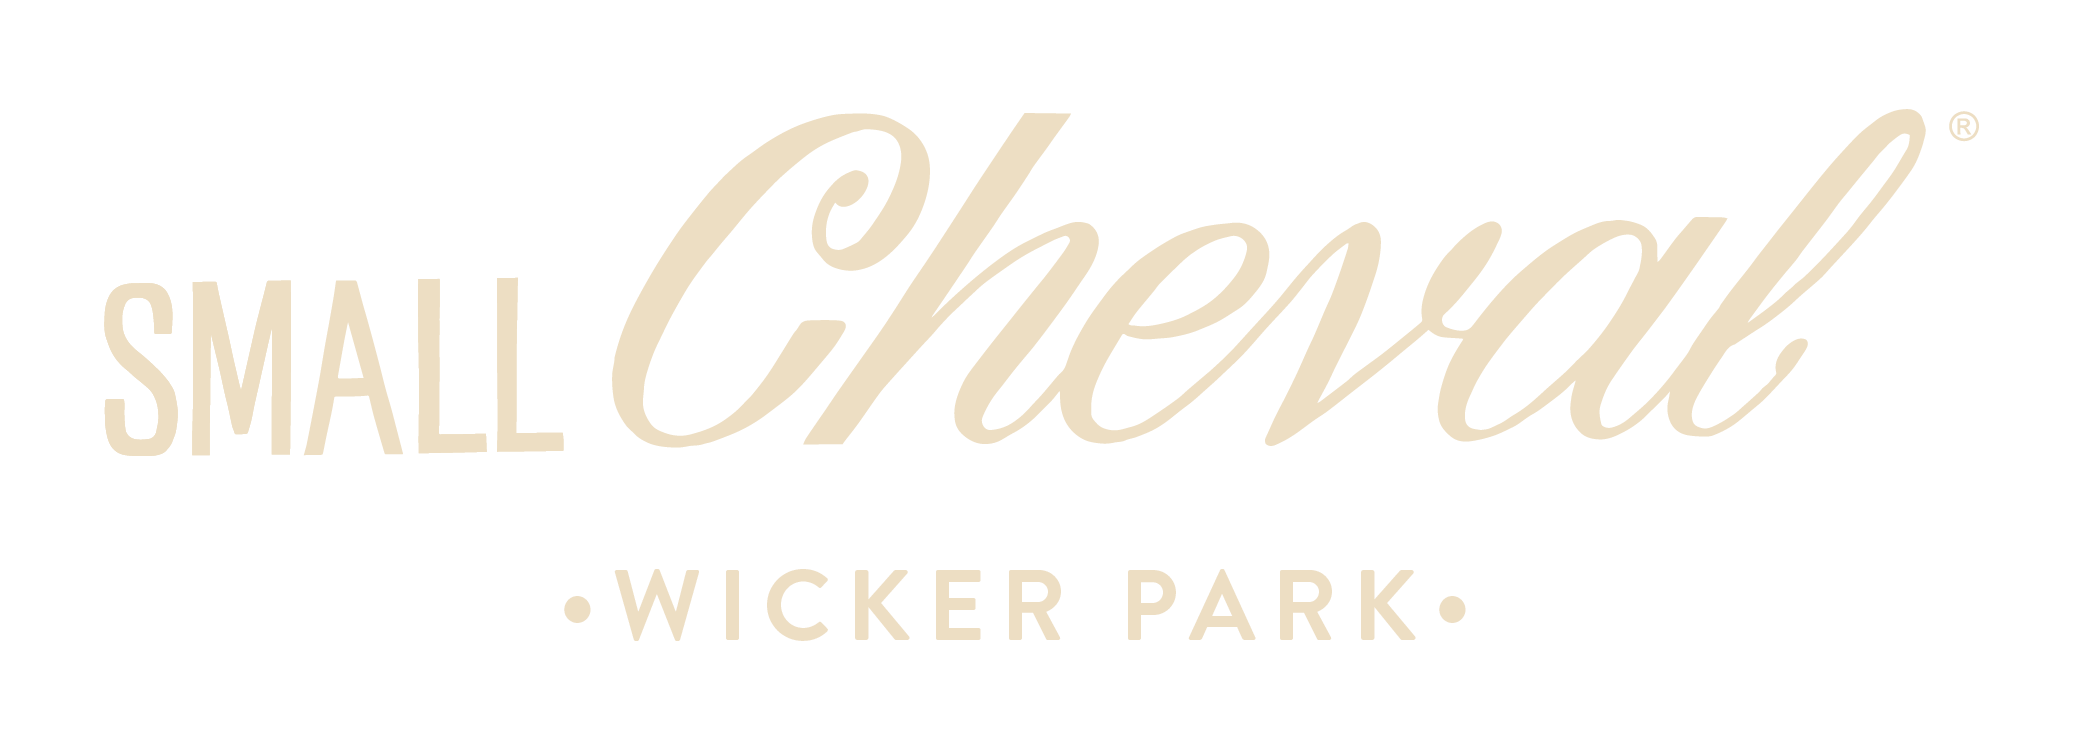 Small Cheval Wicker Park